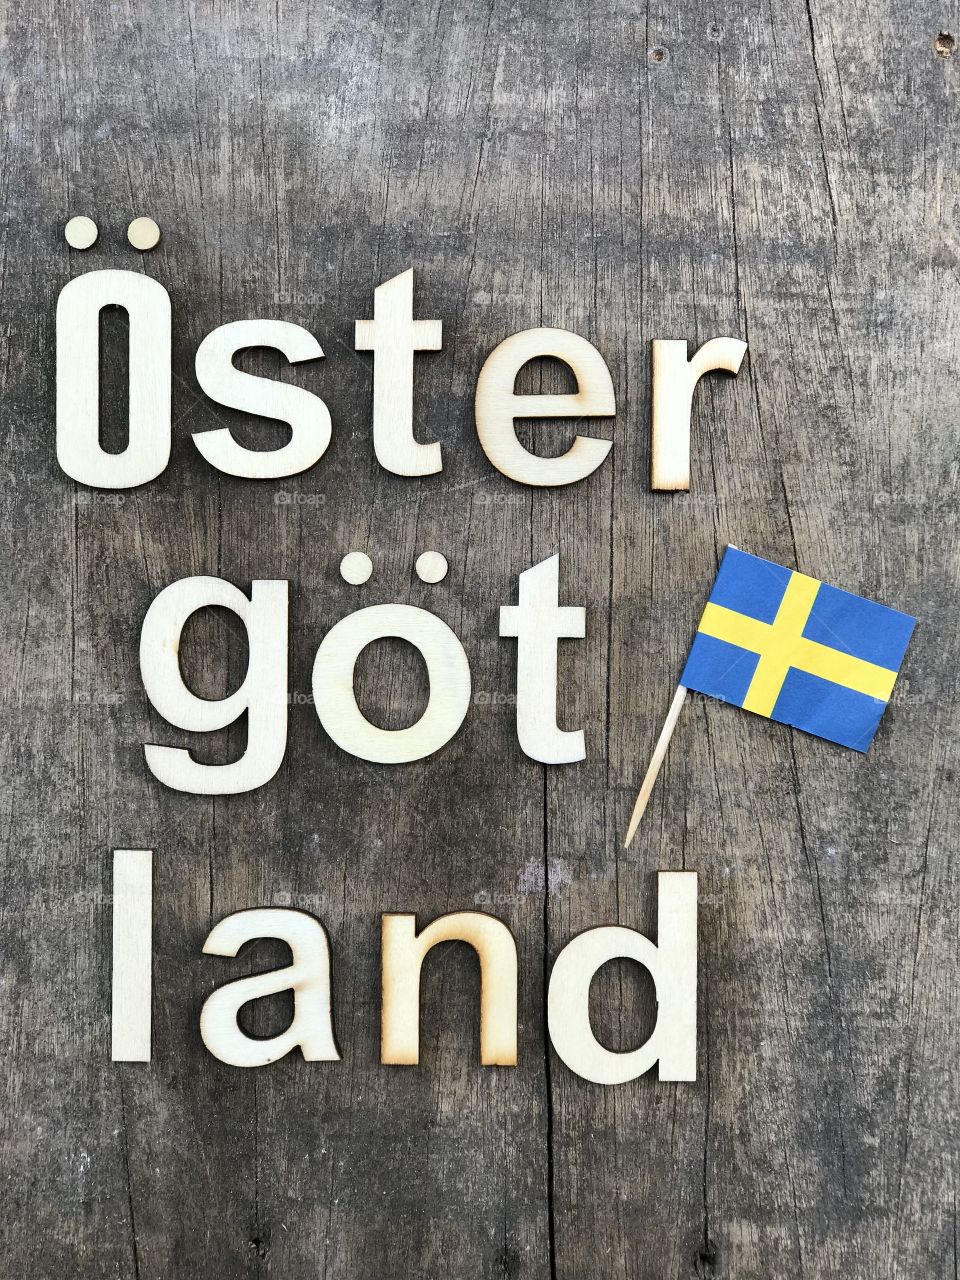 Östergötland county with national flag, Sweden